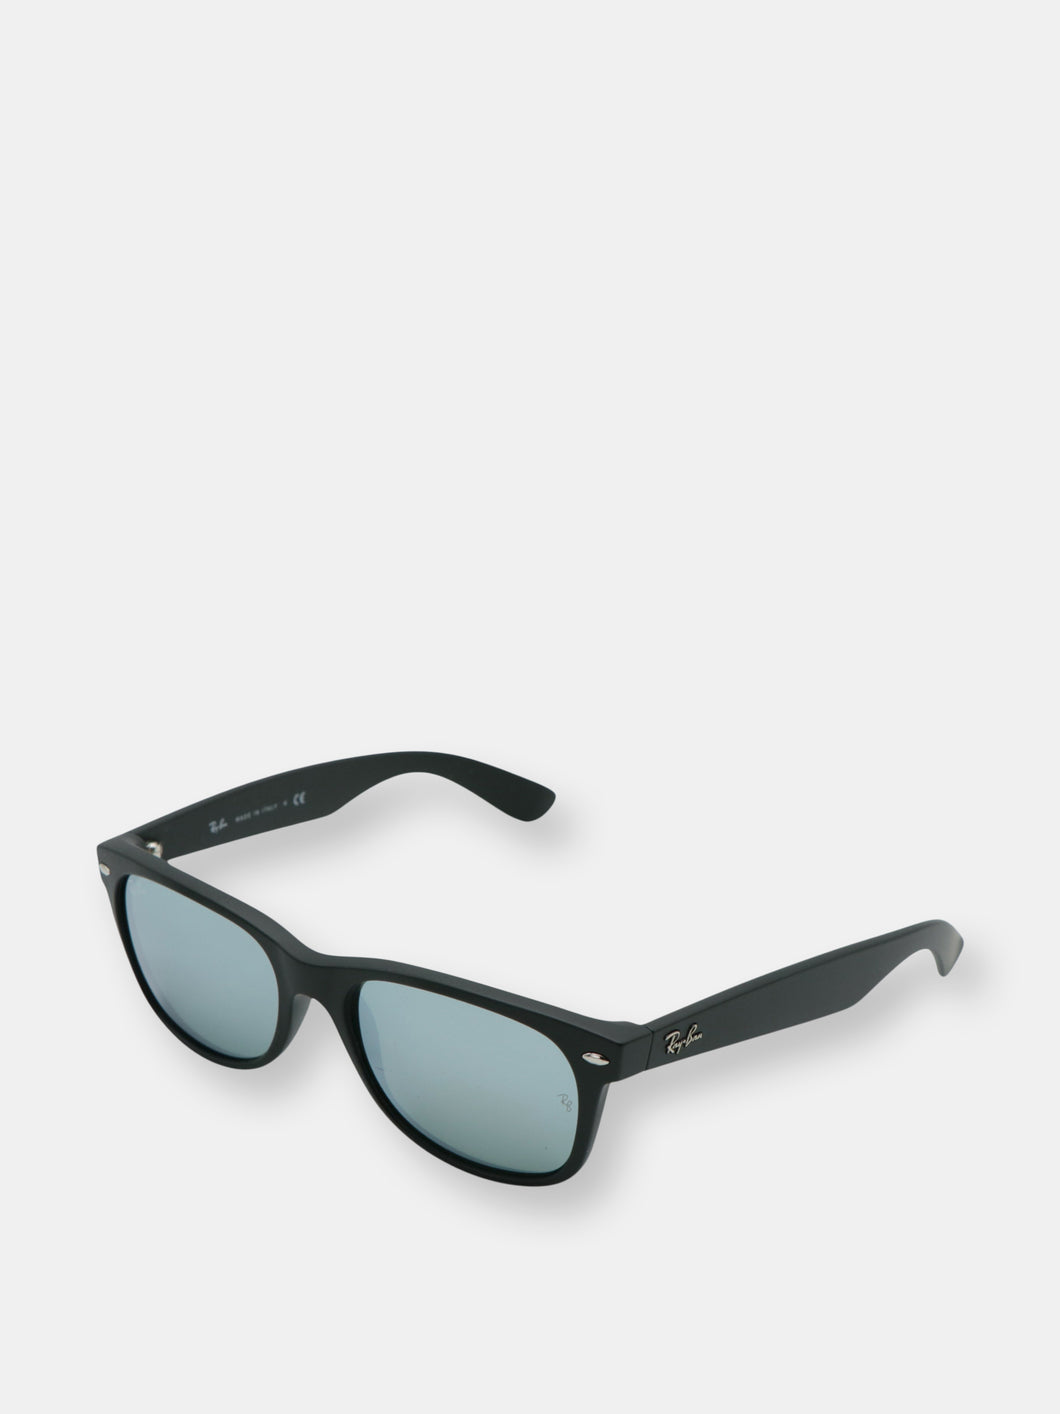 Men's New Wayfarer Sunglasses